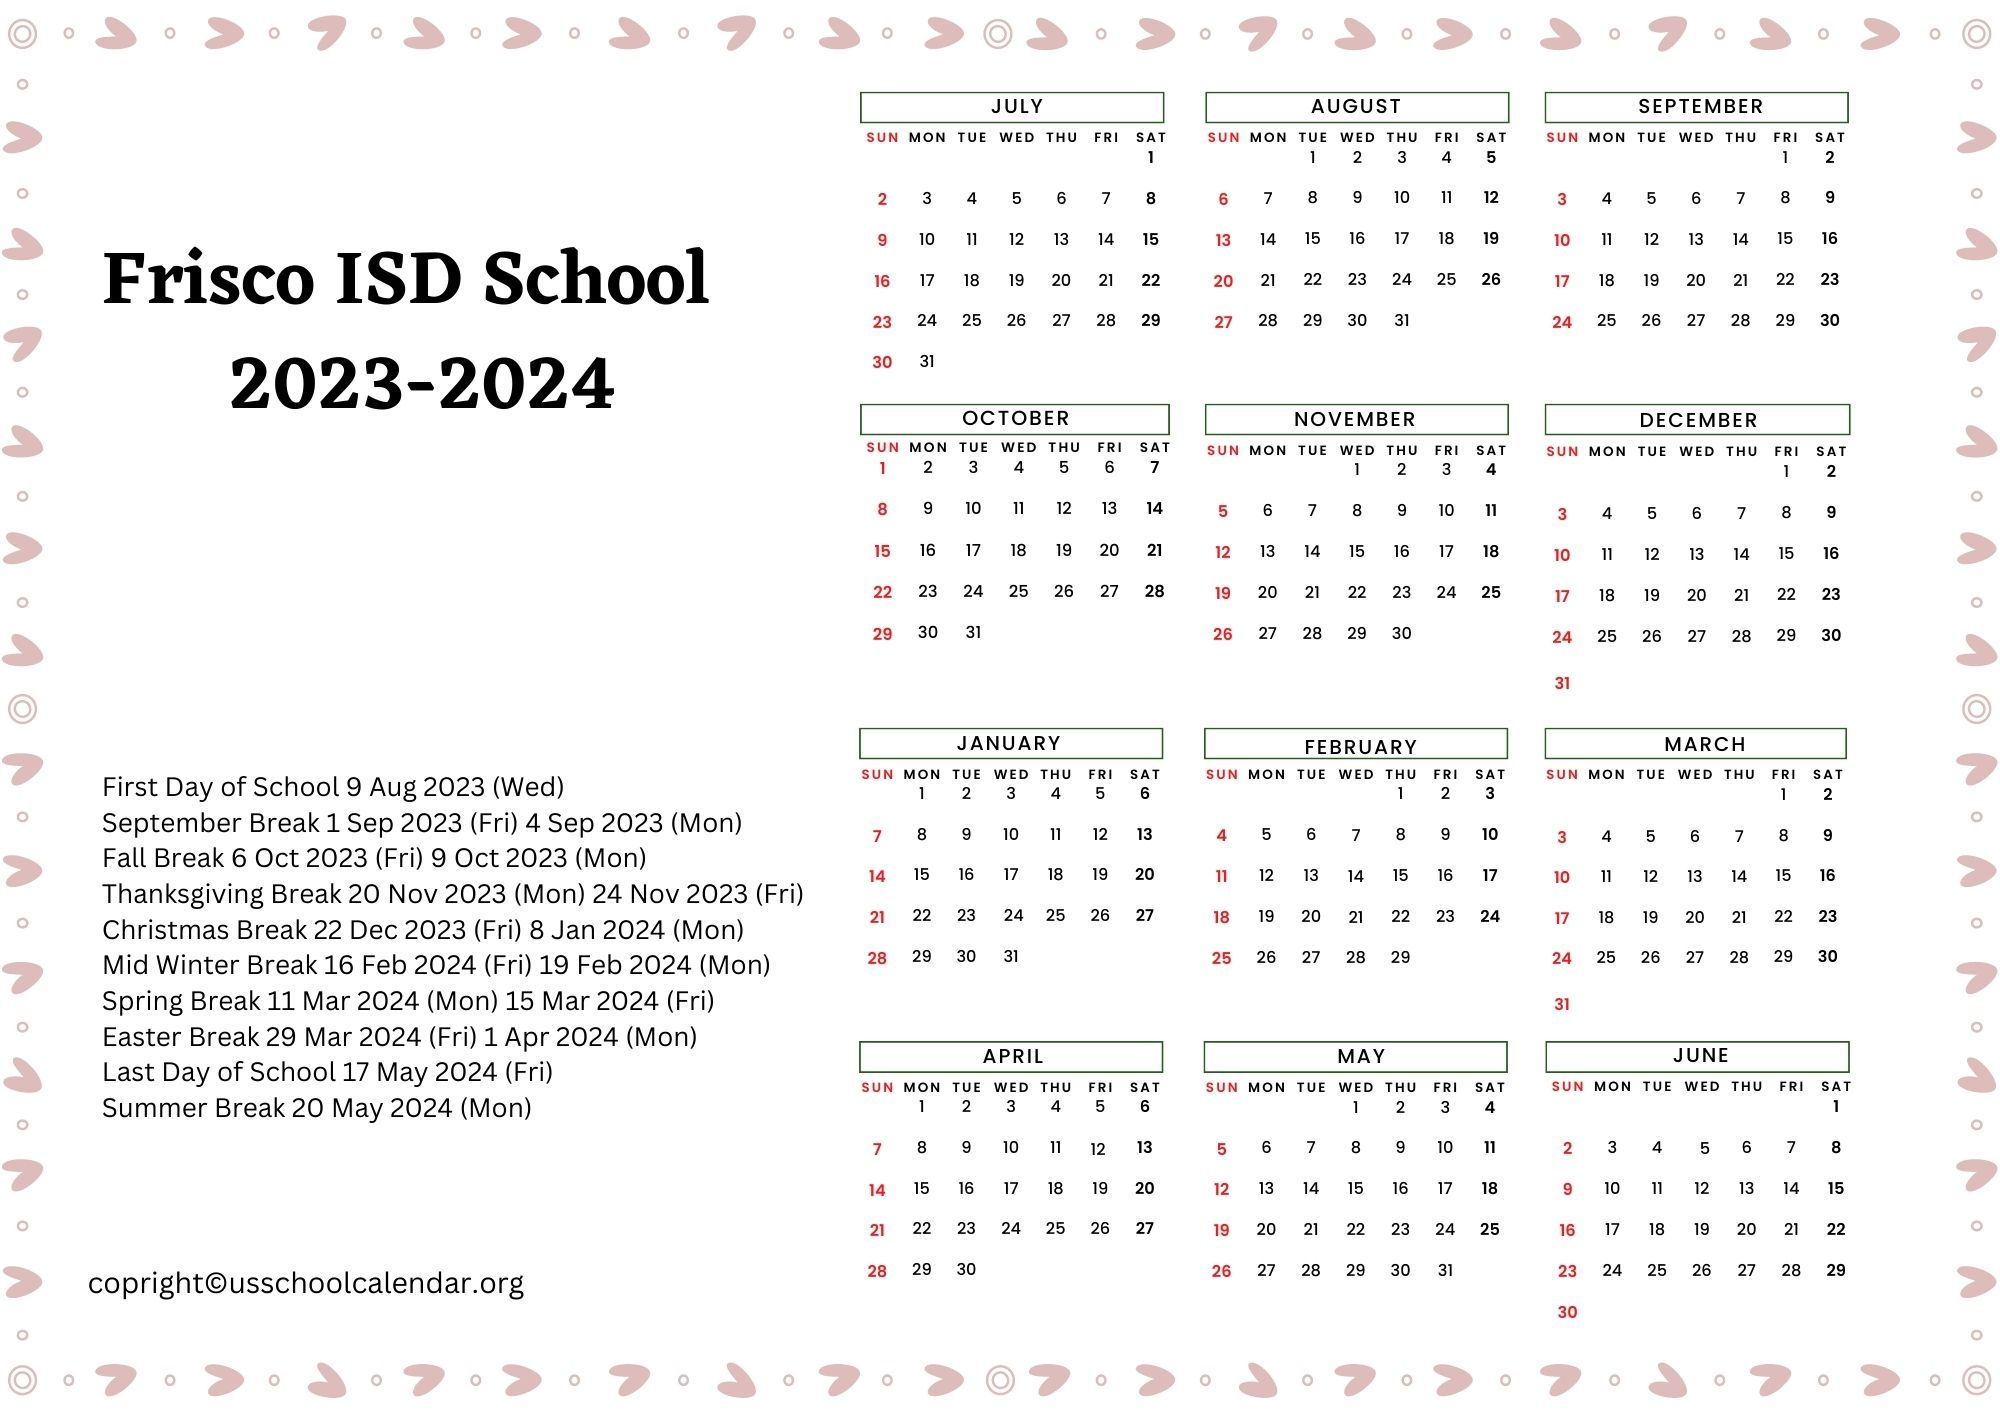 Frisco ISD School Calendar with Holidays 2023-2024